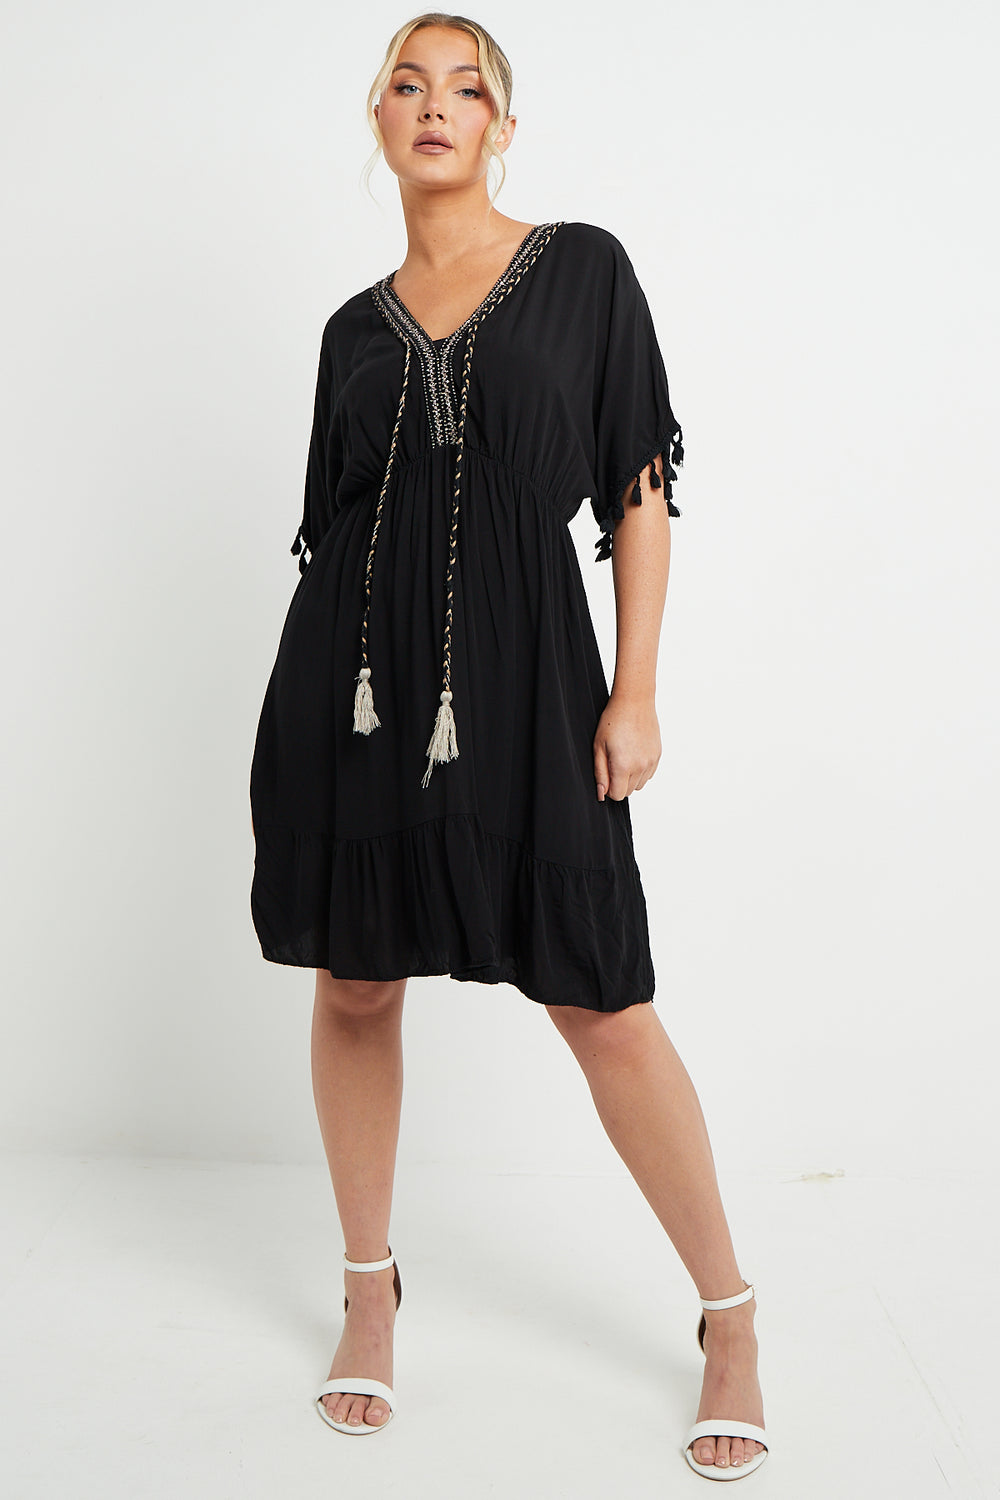 Katrina Tassel Detail Midi Dress - LB Boutique